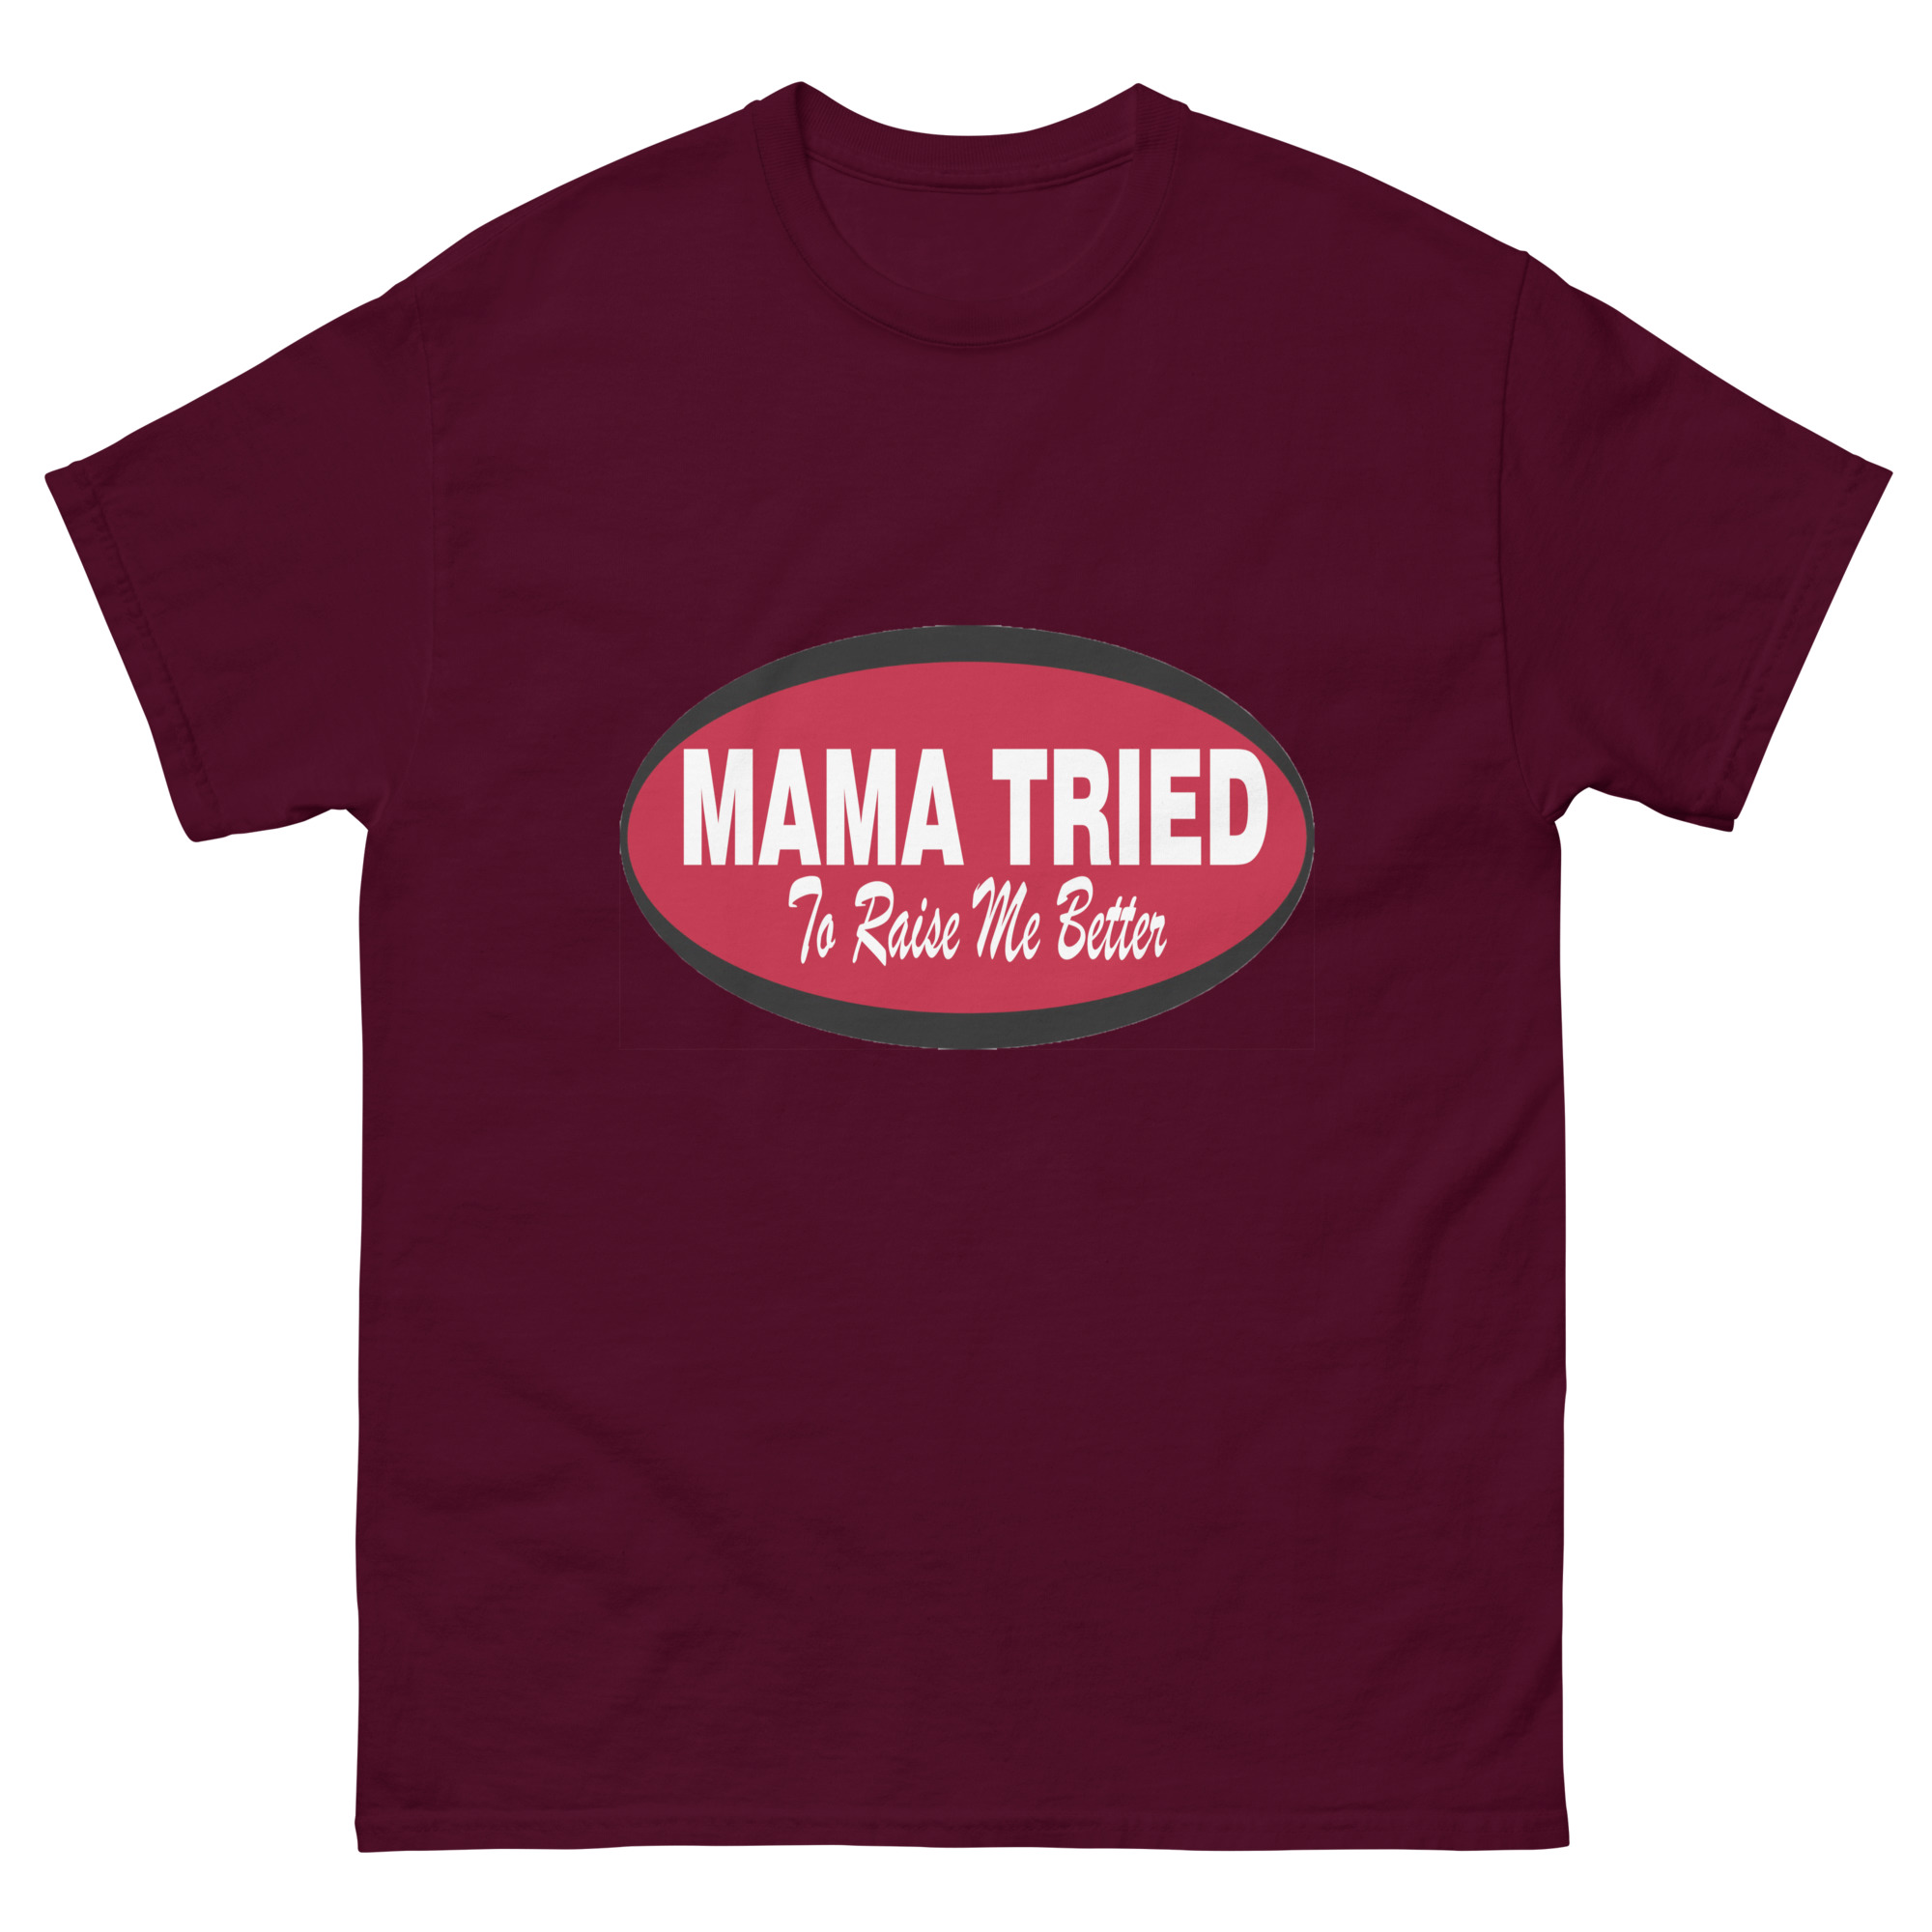 Mama Tried – Men’s classic tee